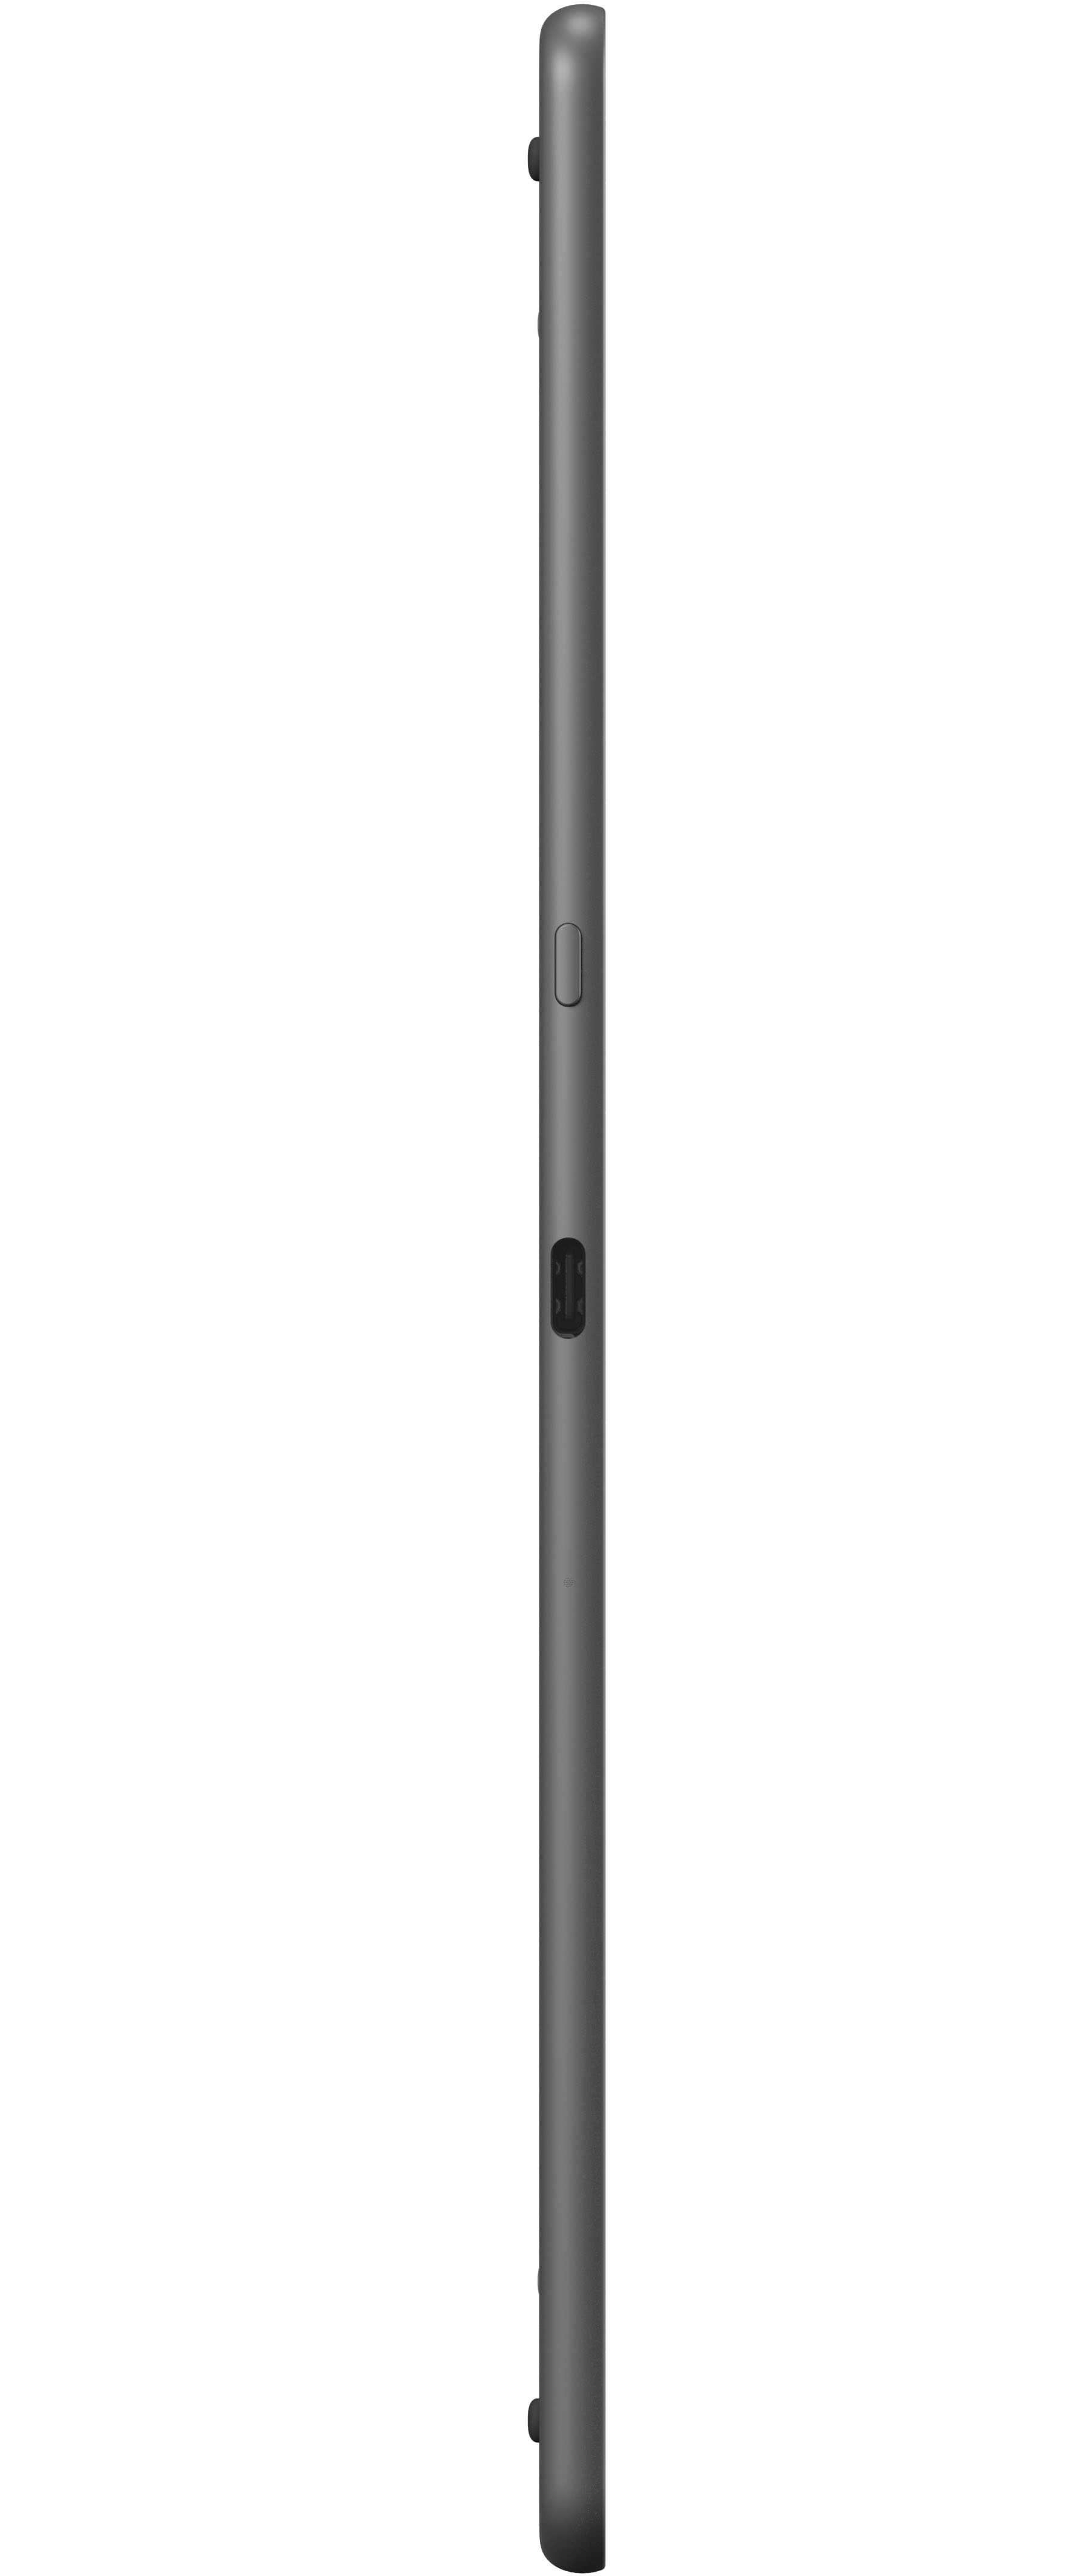 Anhoch PC Market Online - Tablet PC Kindle Scribe + Prime Pen Black